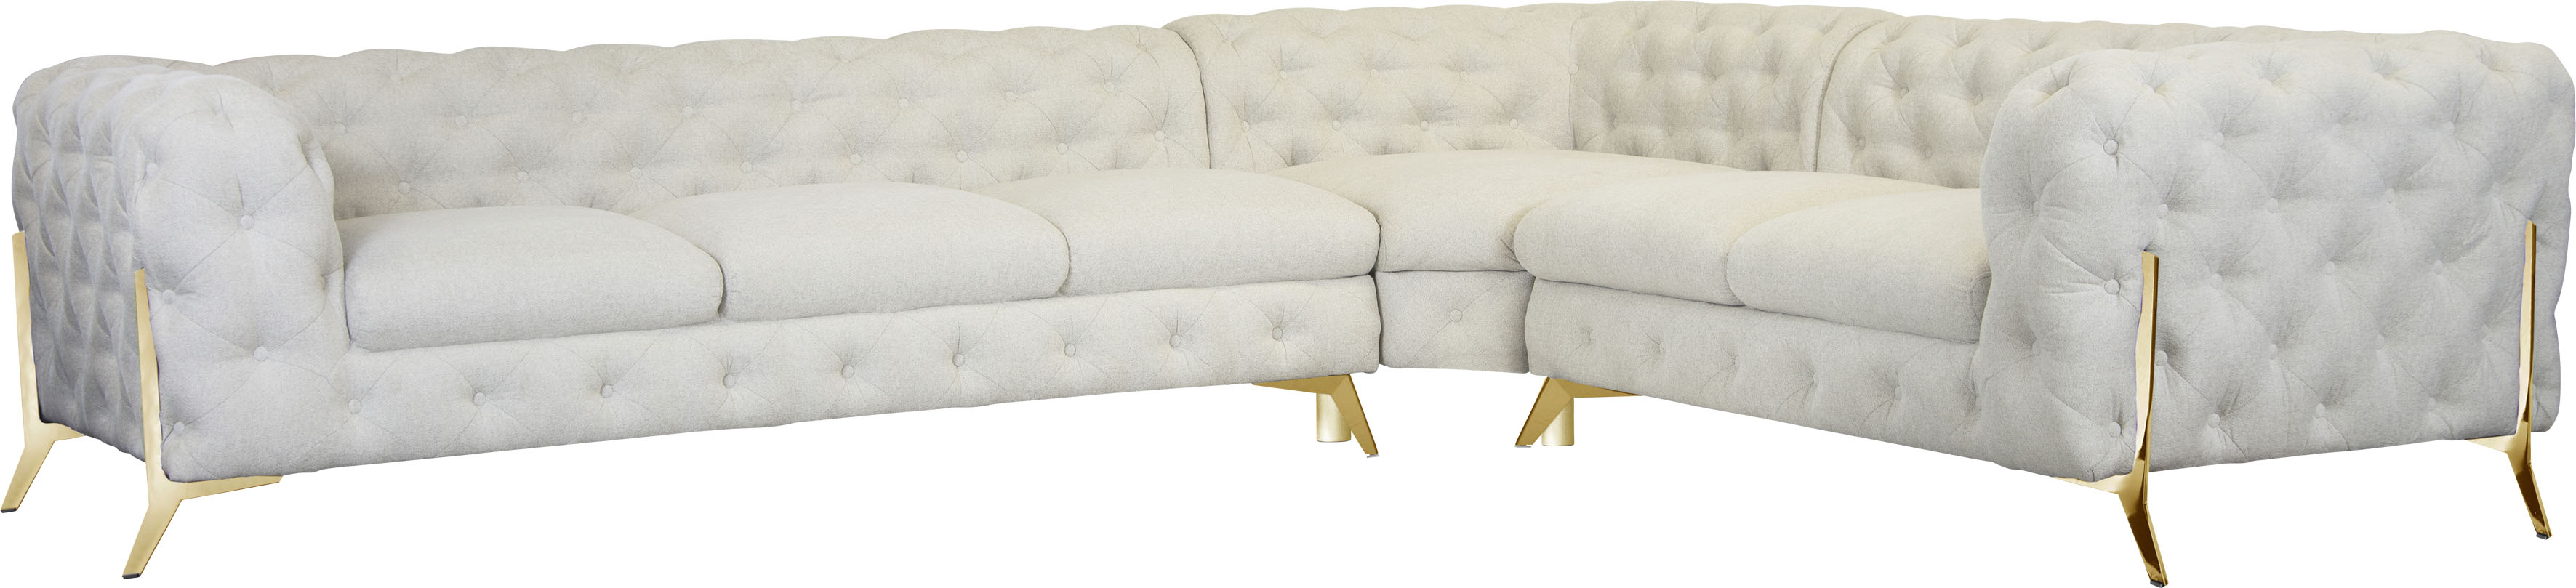 Leonique Chesterfield-Sofa "Amaury", großes Ecksofa, Chesterfield-Optik, Breite 323 cm, Fußfarbe wählbar